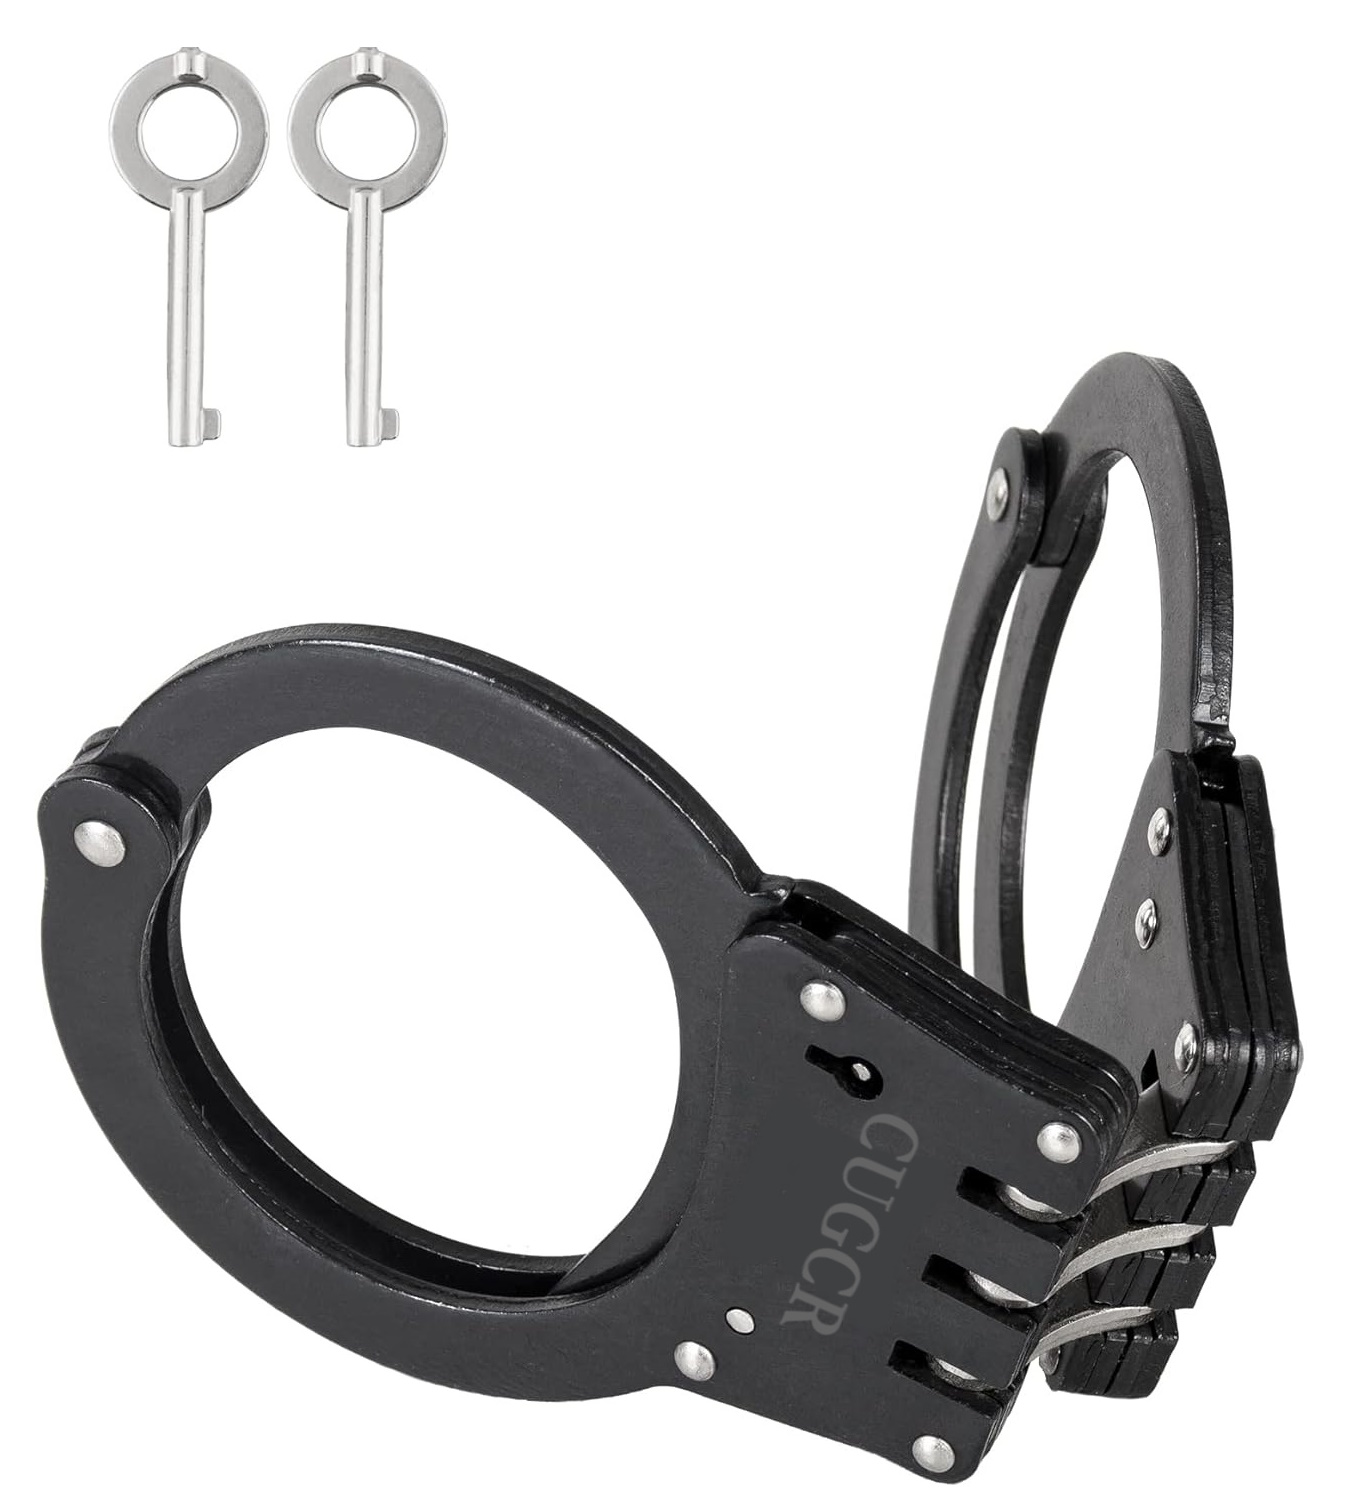 Melissa-proof Handcuffs